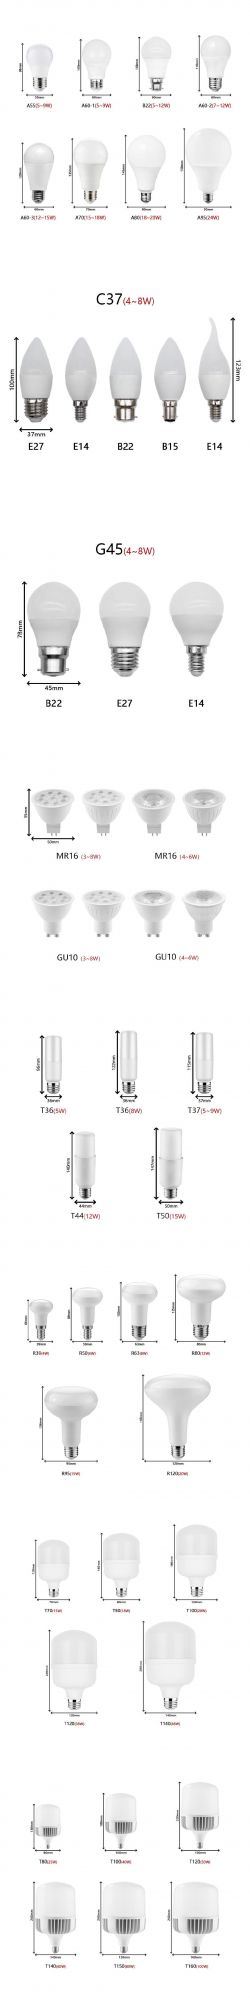 China Factory LED Spotlight GU10 MR16 2835SMD Bulb Lamp for Indoor Commercial Spot Lighting